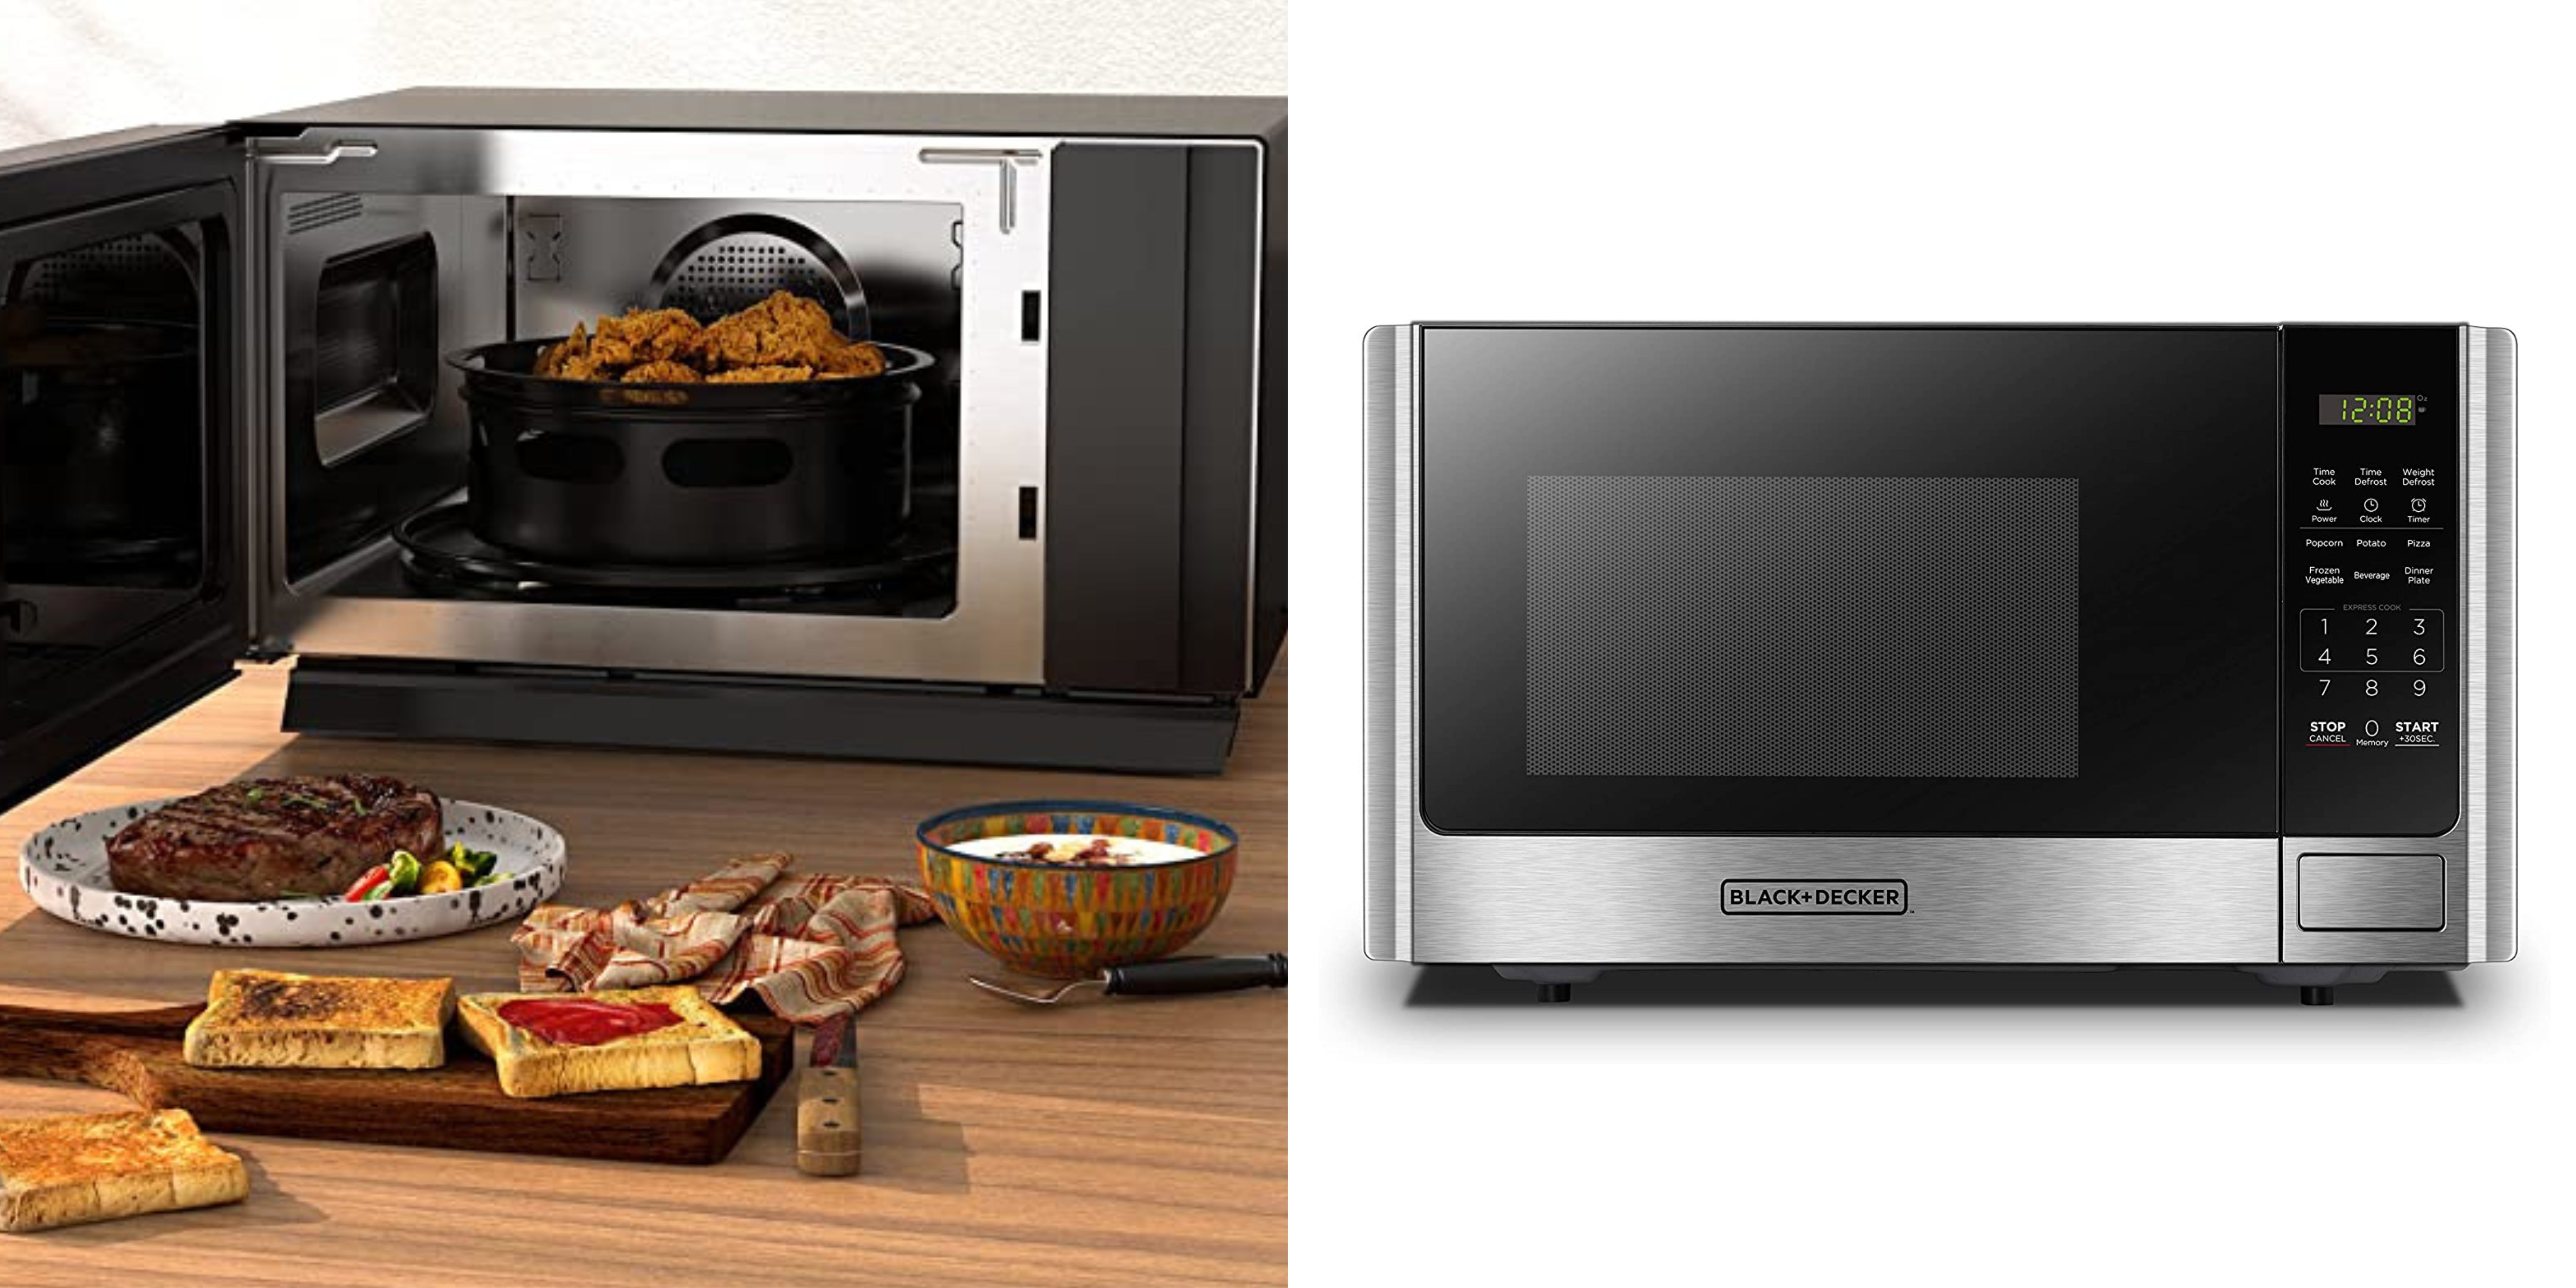 Toshiba 1.5-cu ft 1000-Watt Air Fry Countertop Microwave (Black